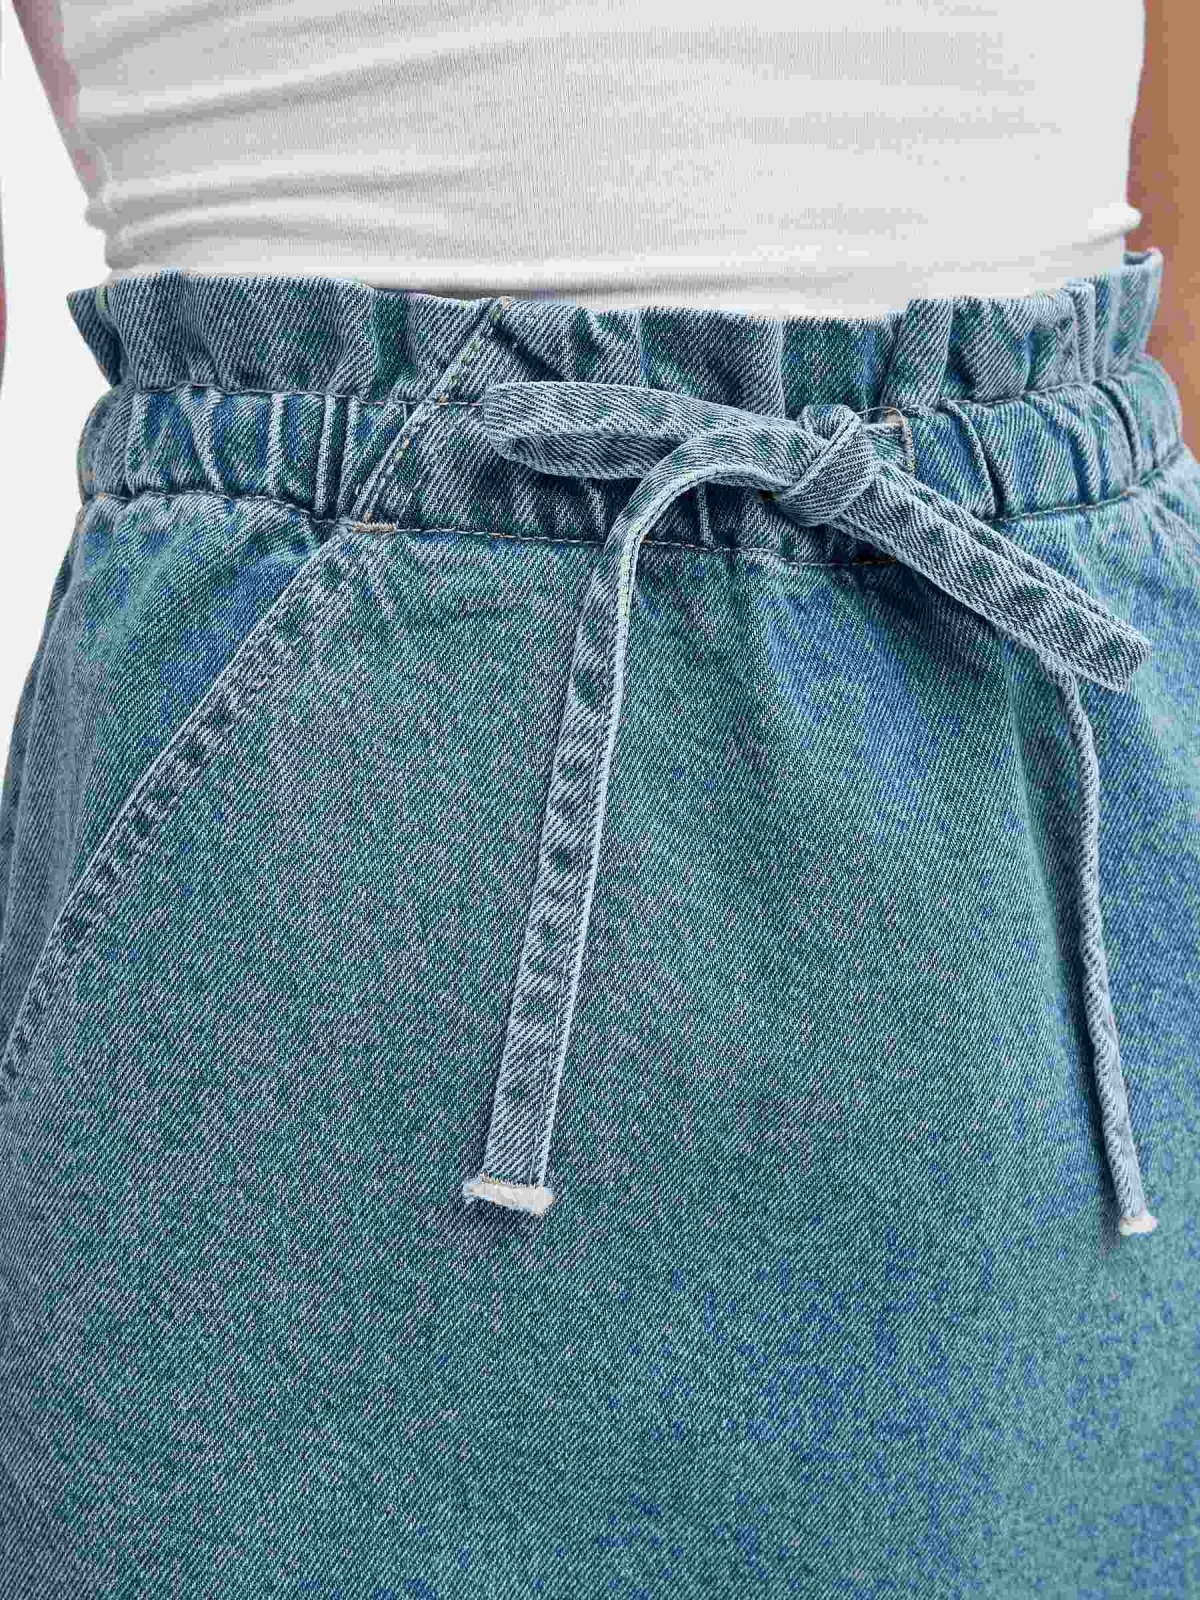 Denim skirt with elastic waistband blue detail view